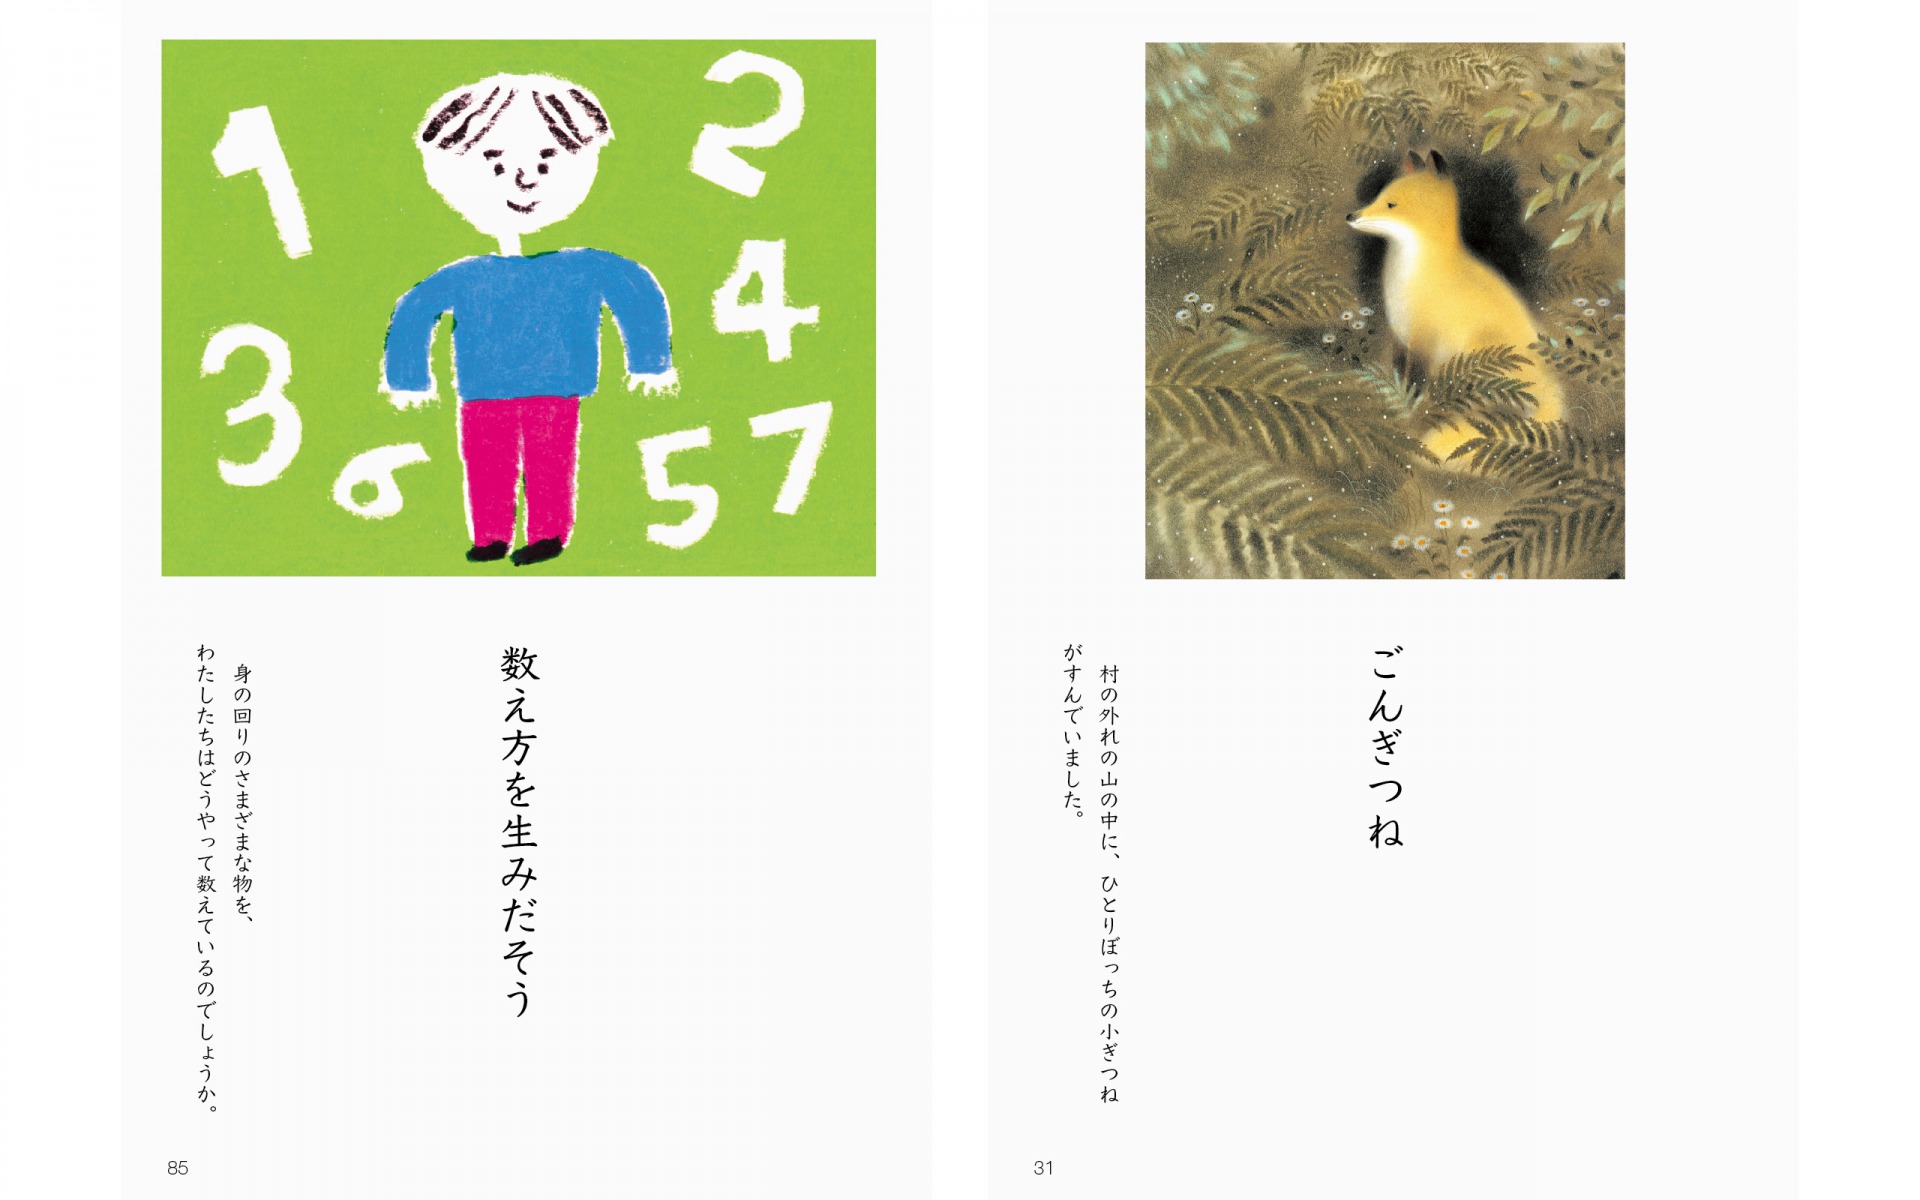  Japanese Language Arts Textbooks